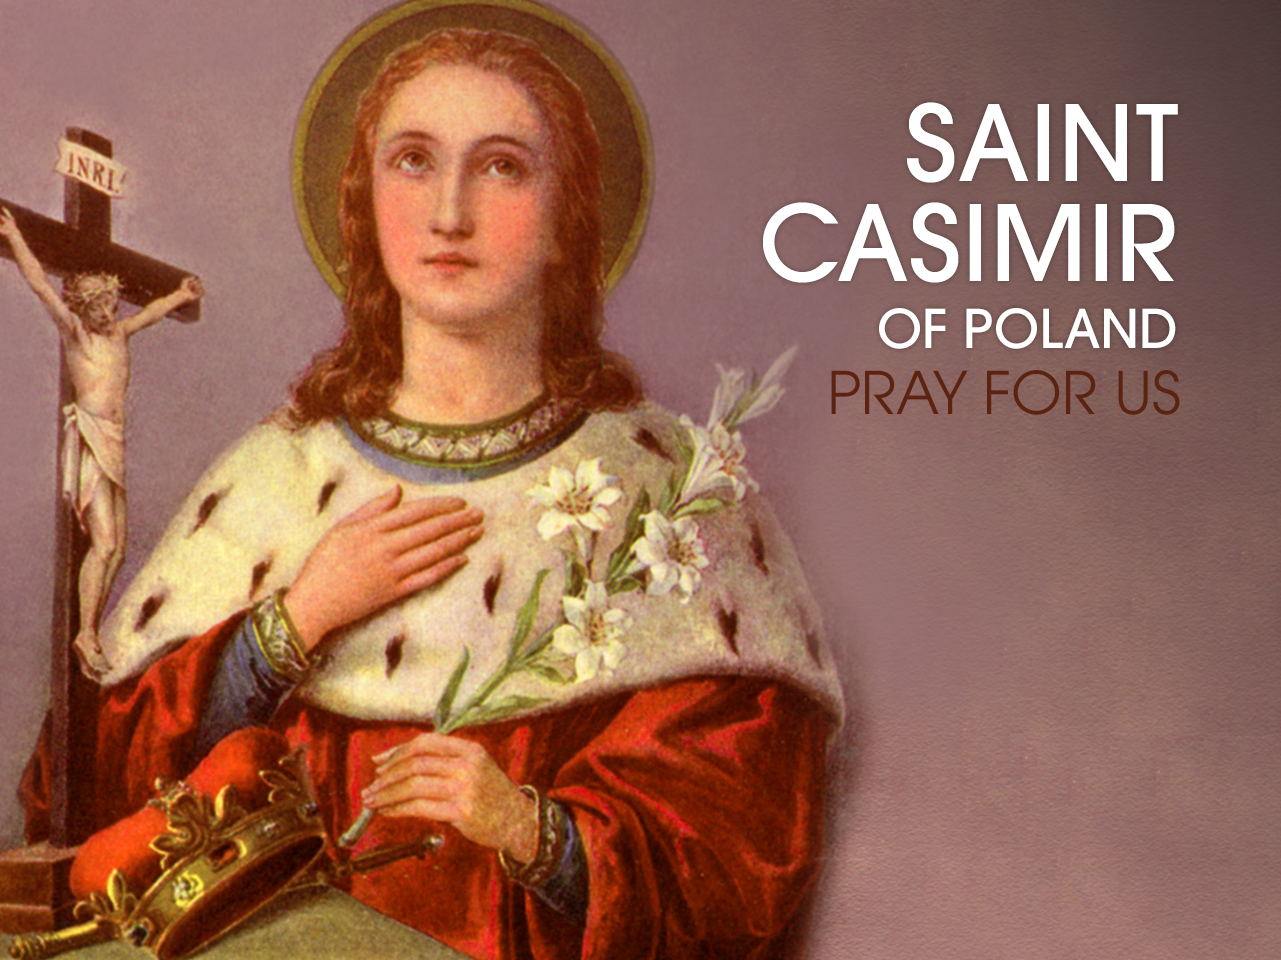 St. Casimir of Poland